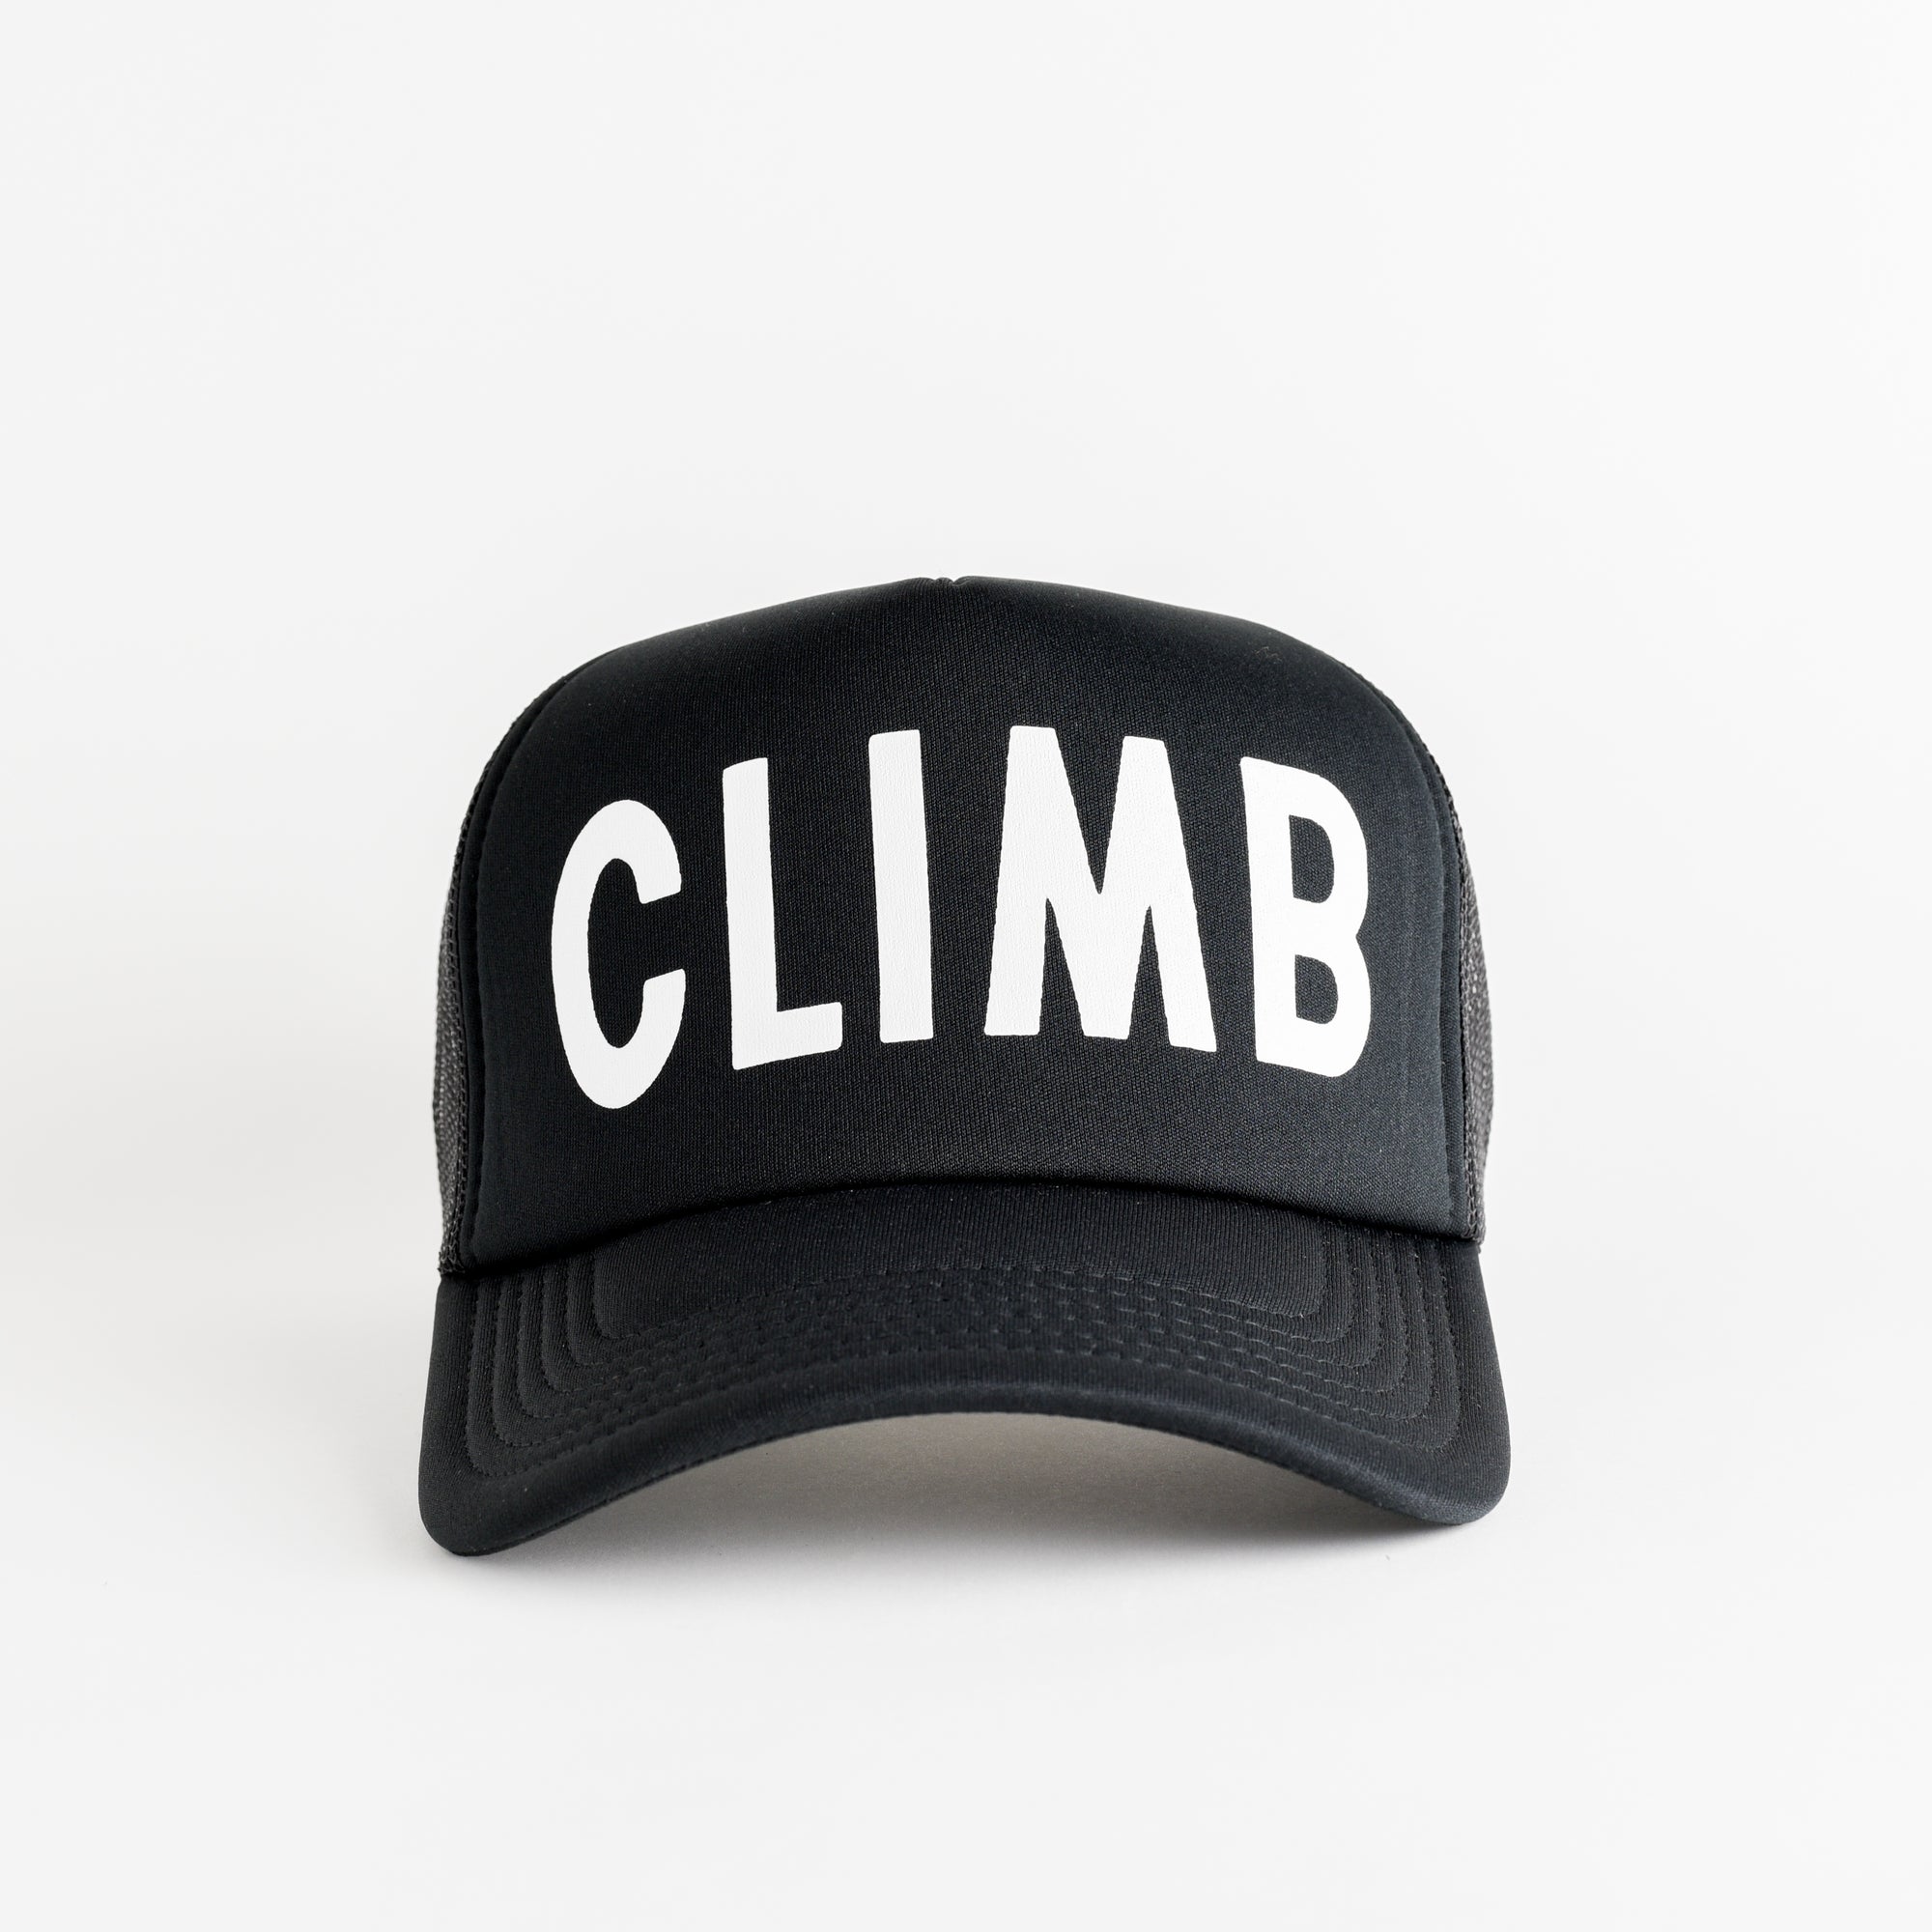 Climb Recycled Trucker Hat - black